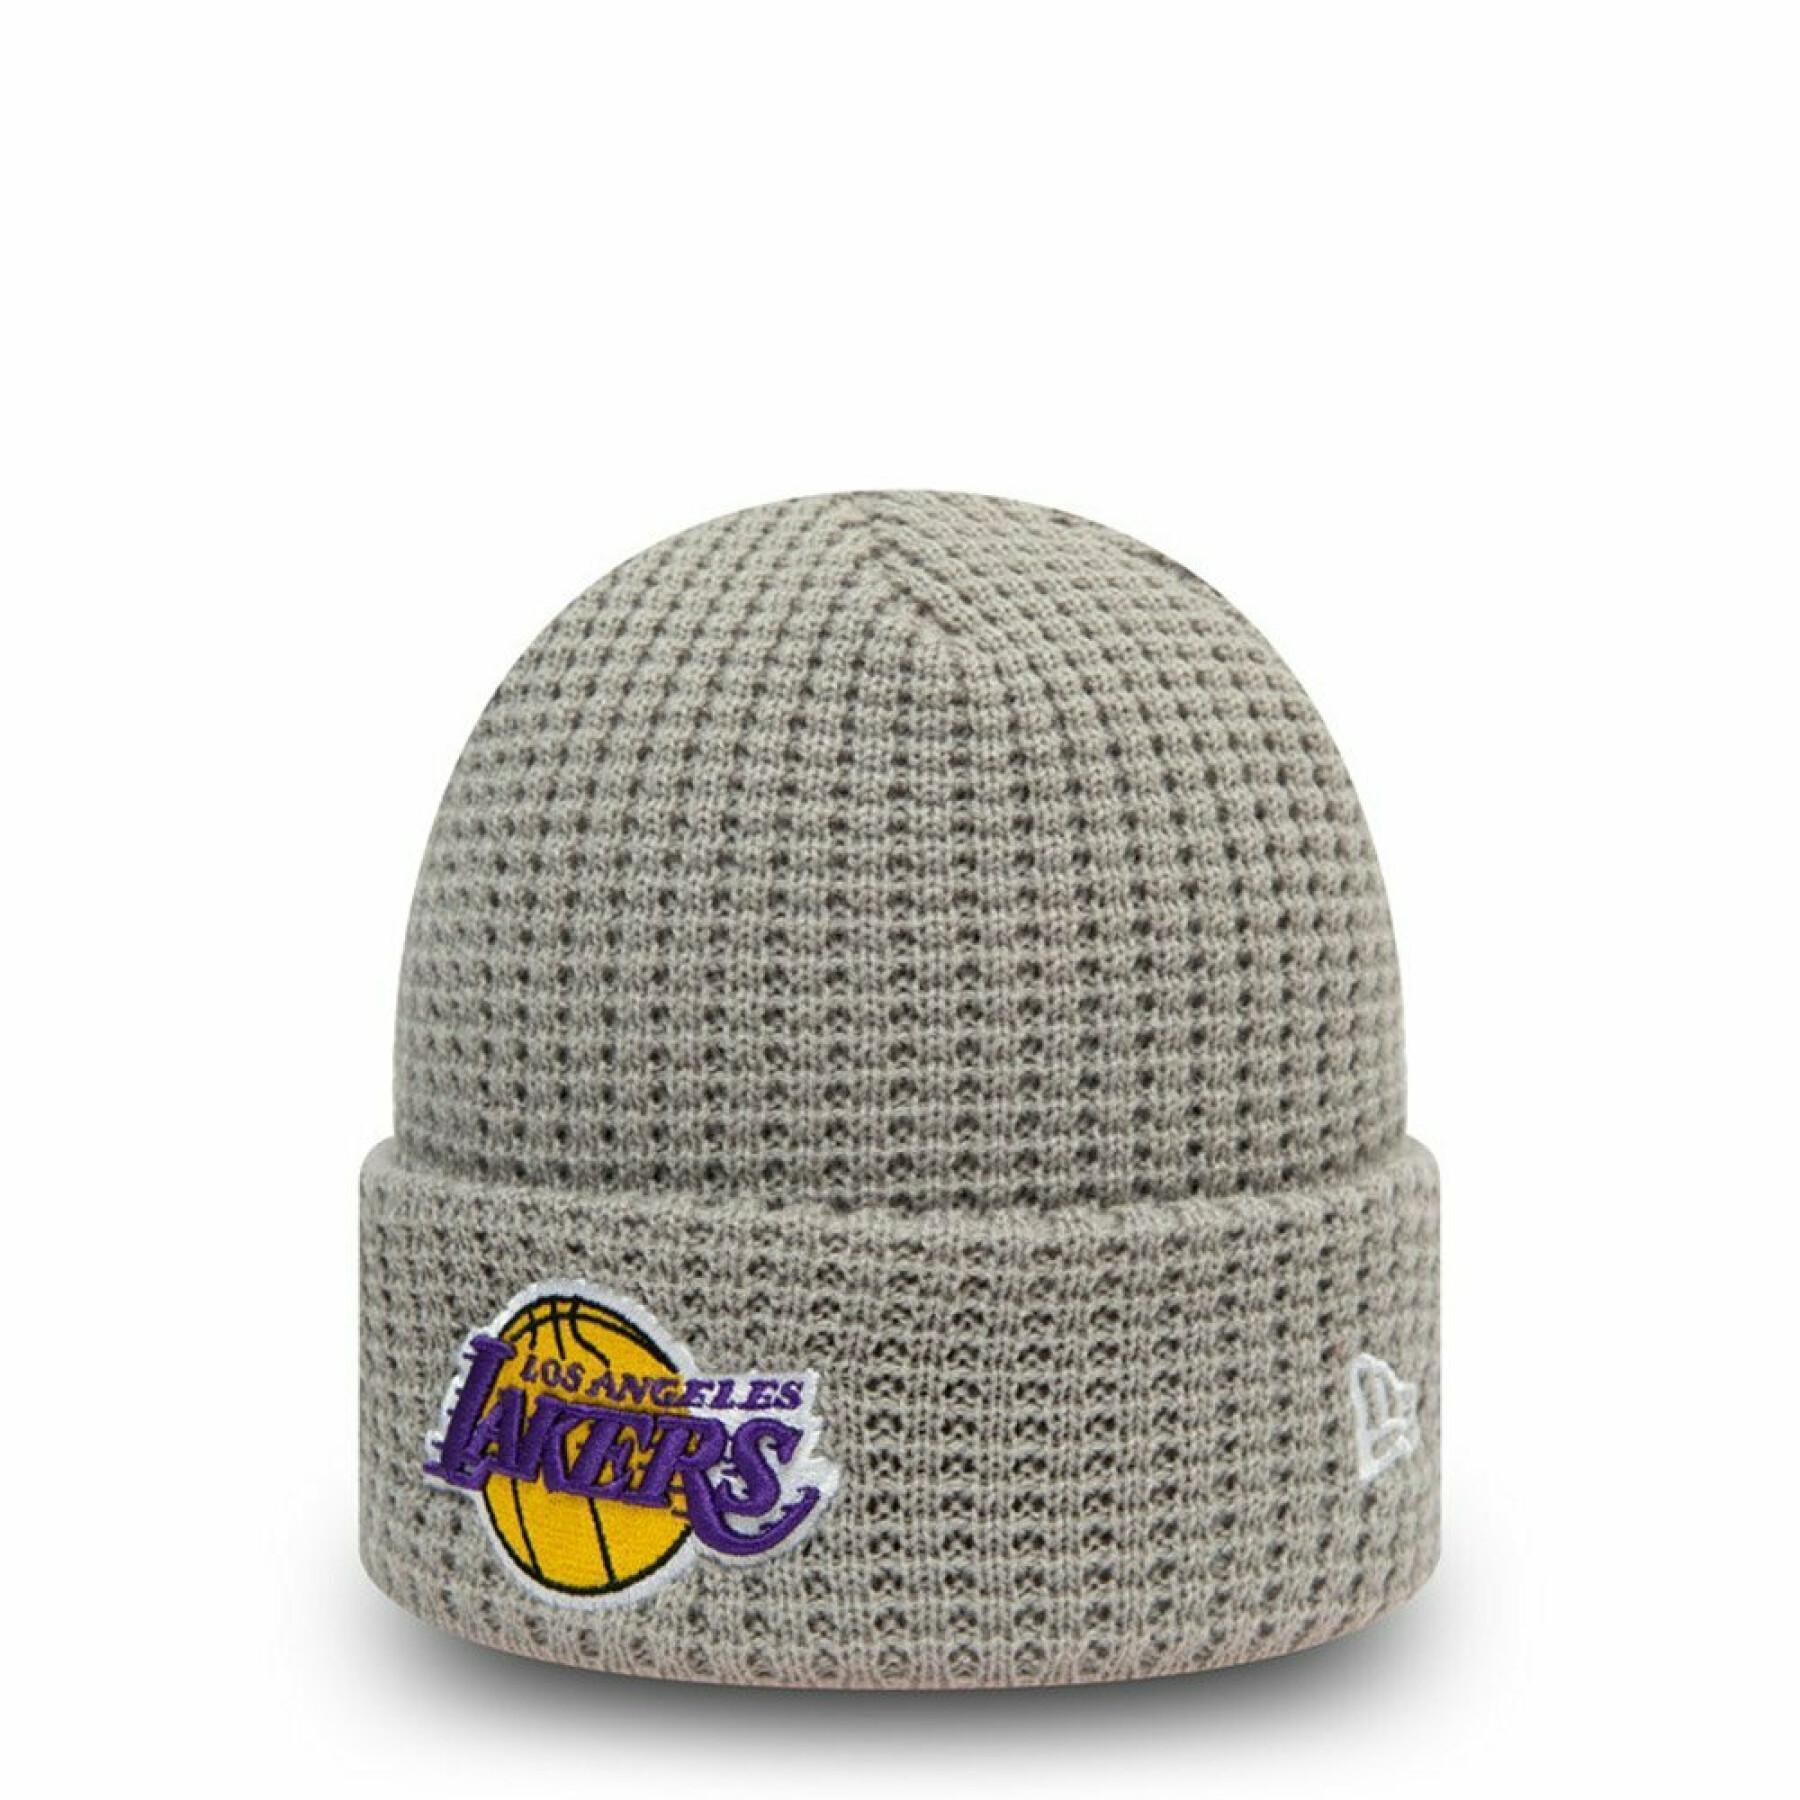 Los Angeles Lakers beanie hat